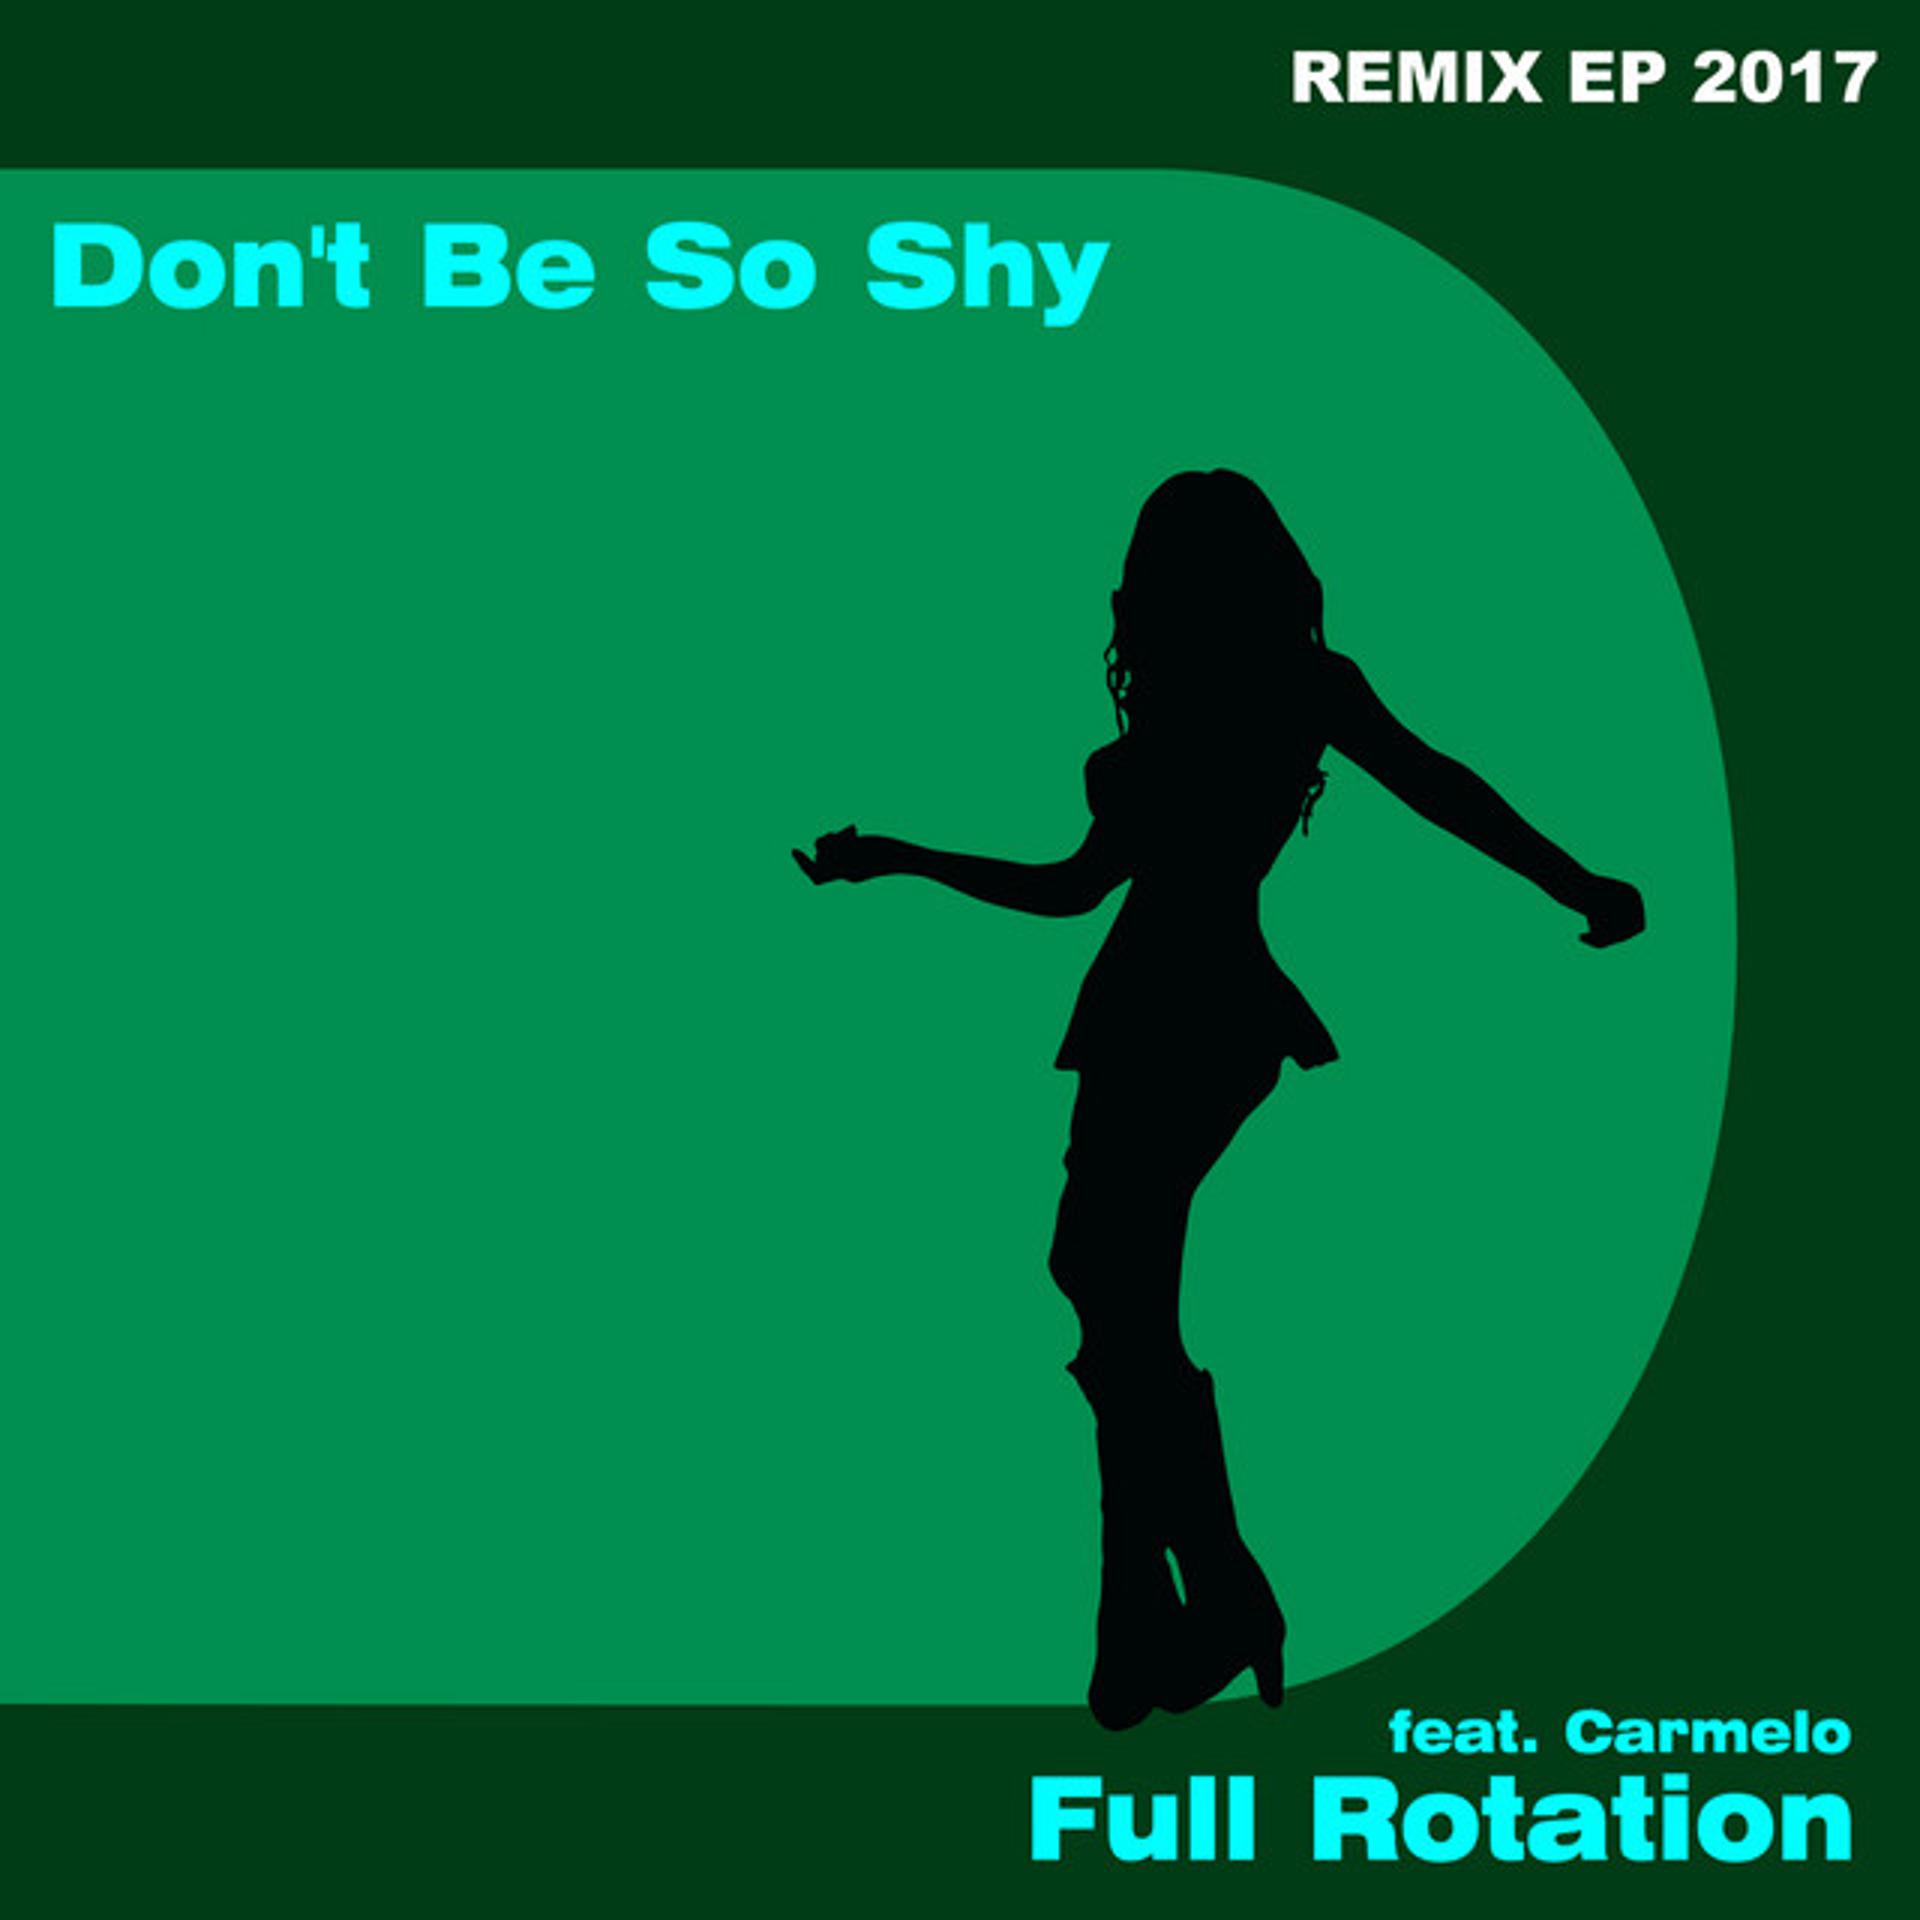 Don't be so shy. Don't be. Don't be so shy ремикс. Don't be so shy Filatov. Remix 2017